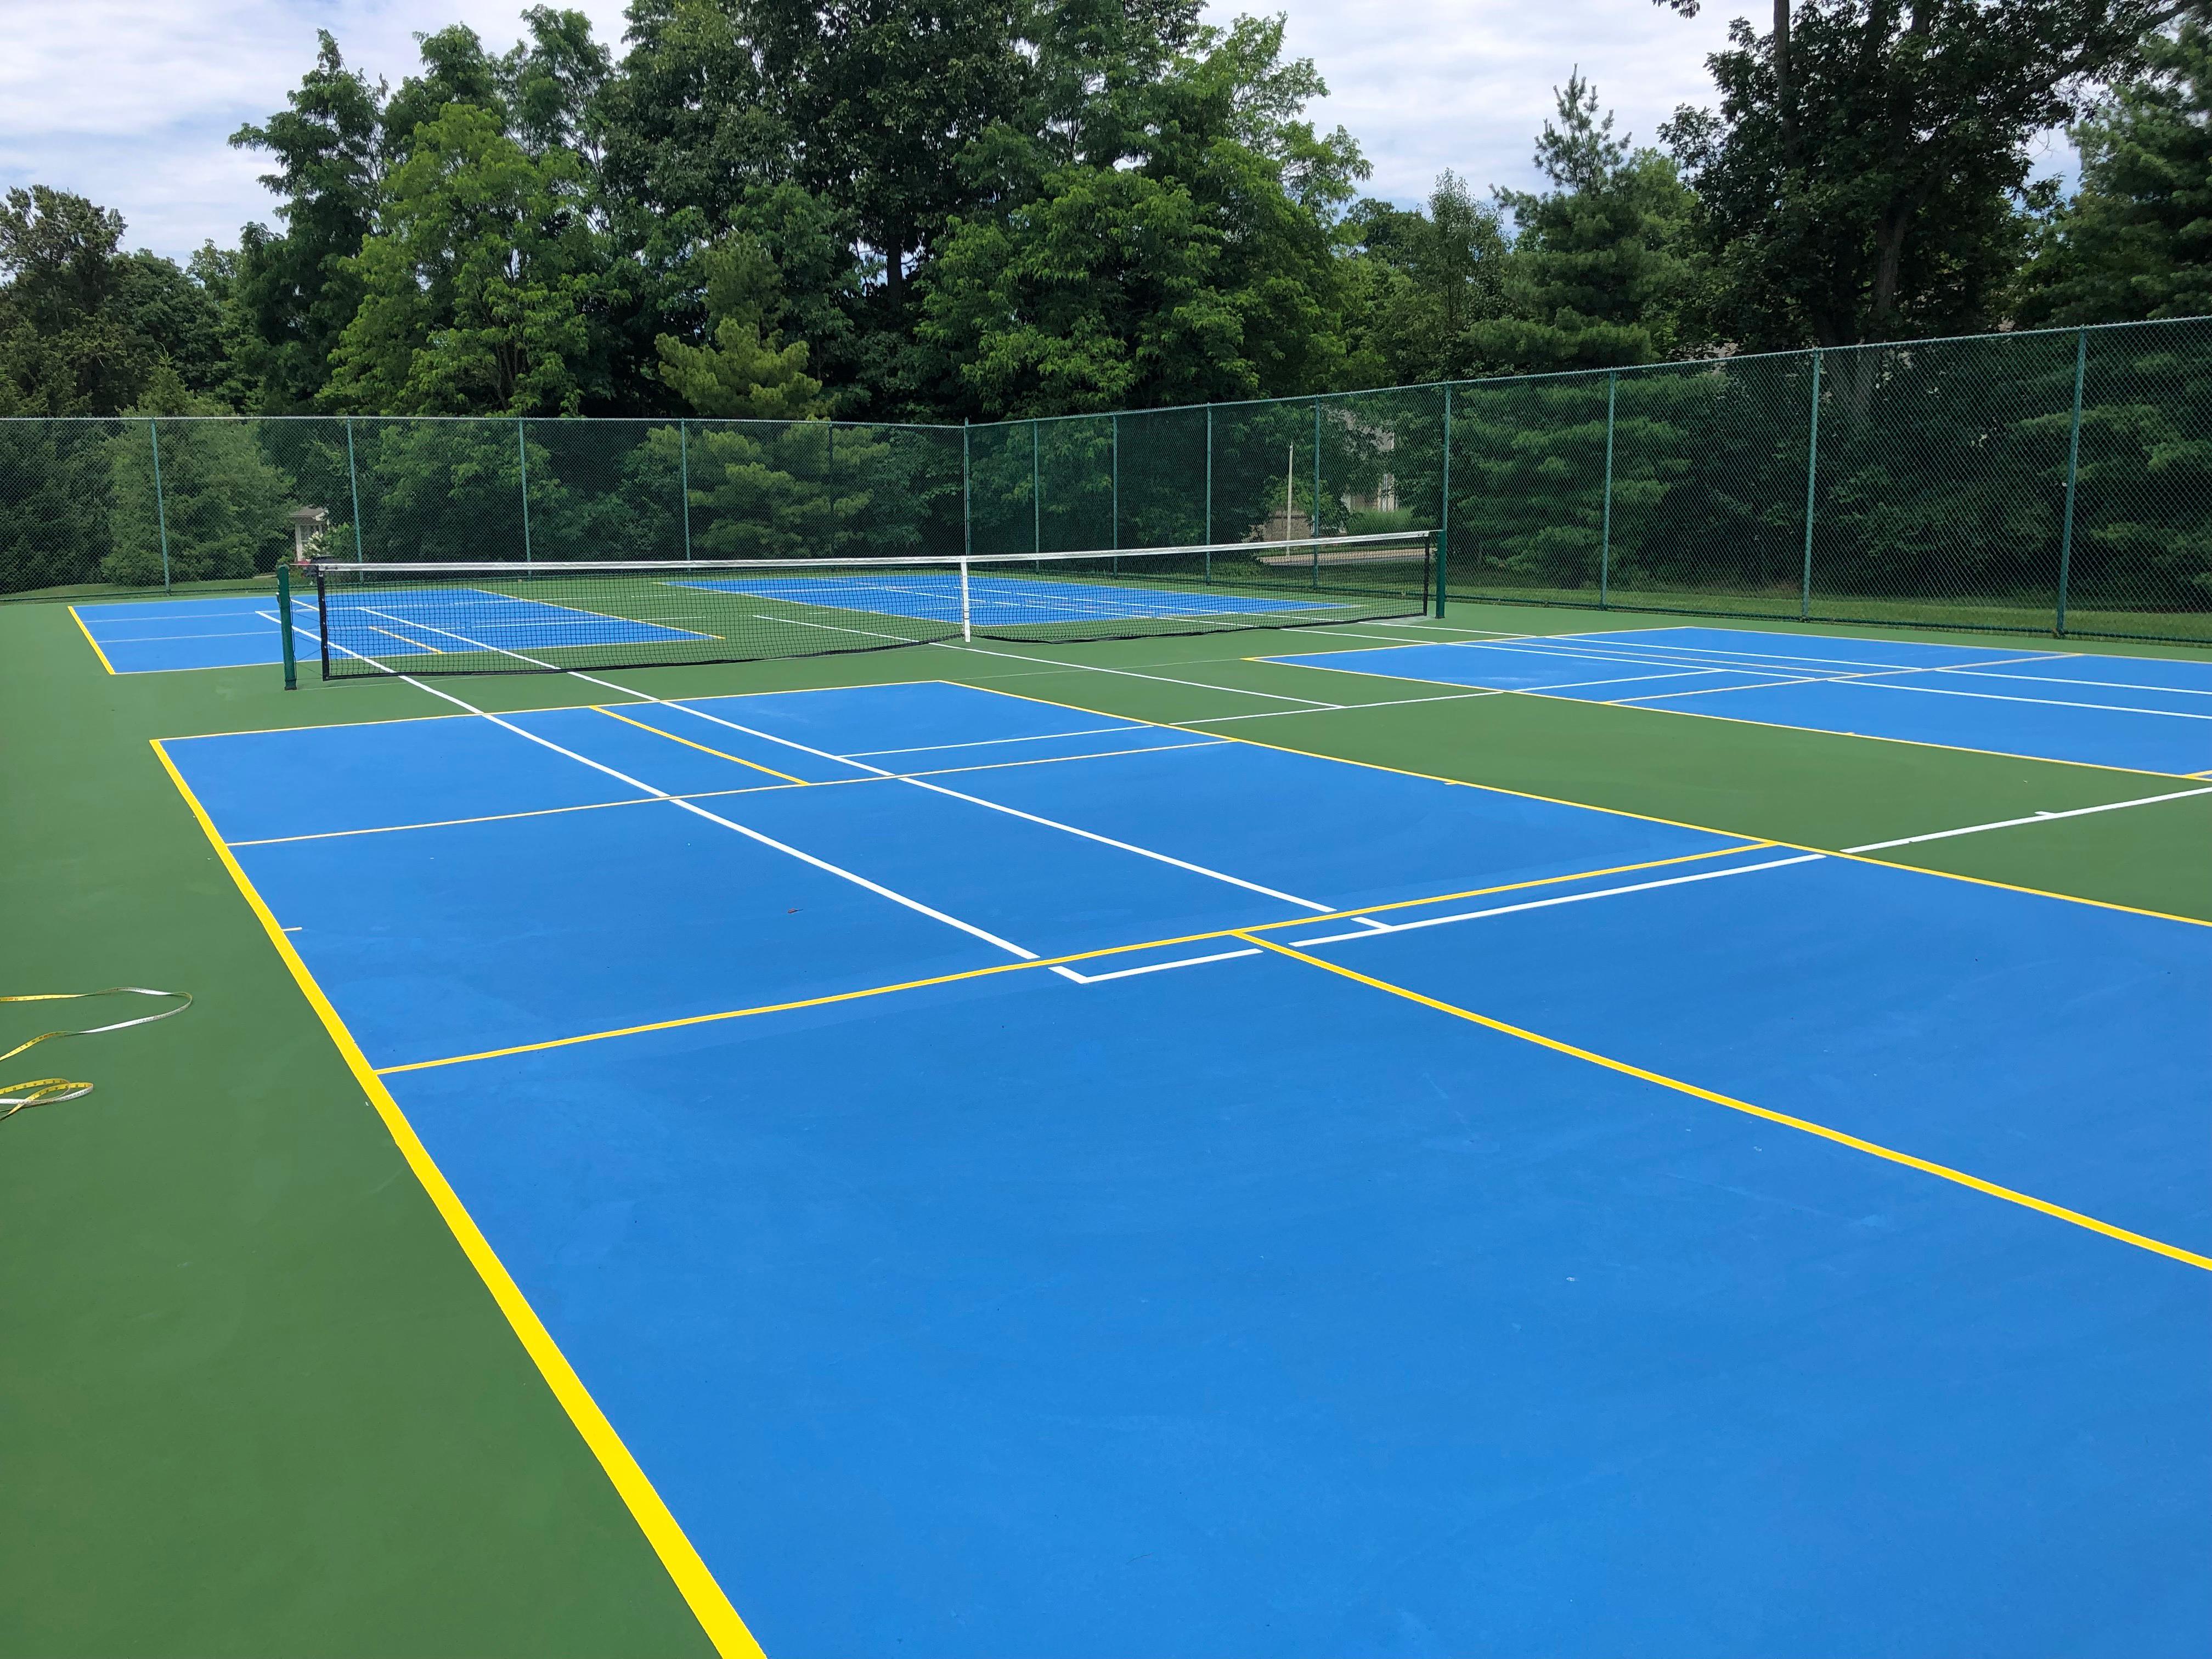 Bridgehaven Pickleball Tennis Facility - We still have time to get your new court in, remodel your c Schubert Tennis LLC Cincinnati (513)310-5890